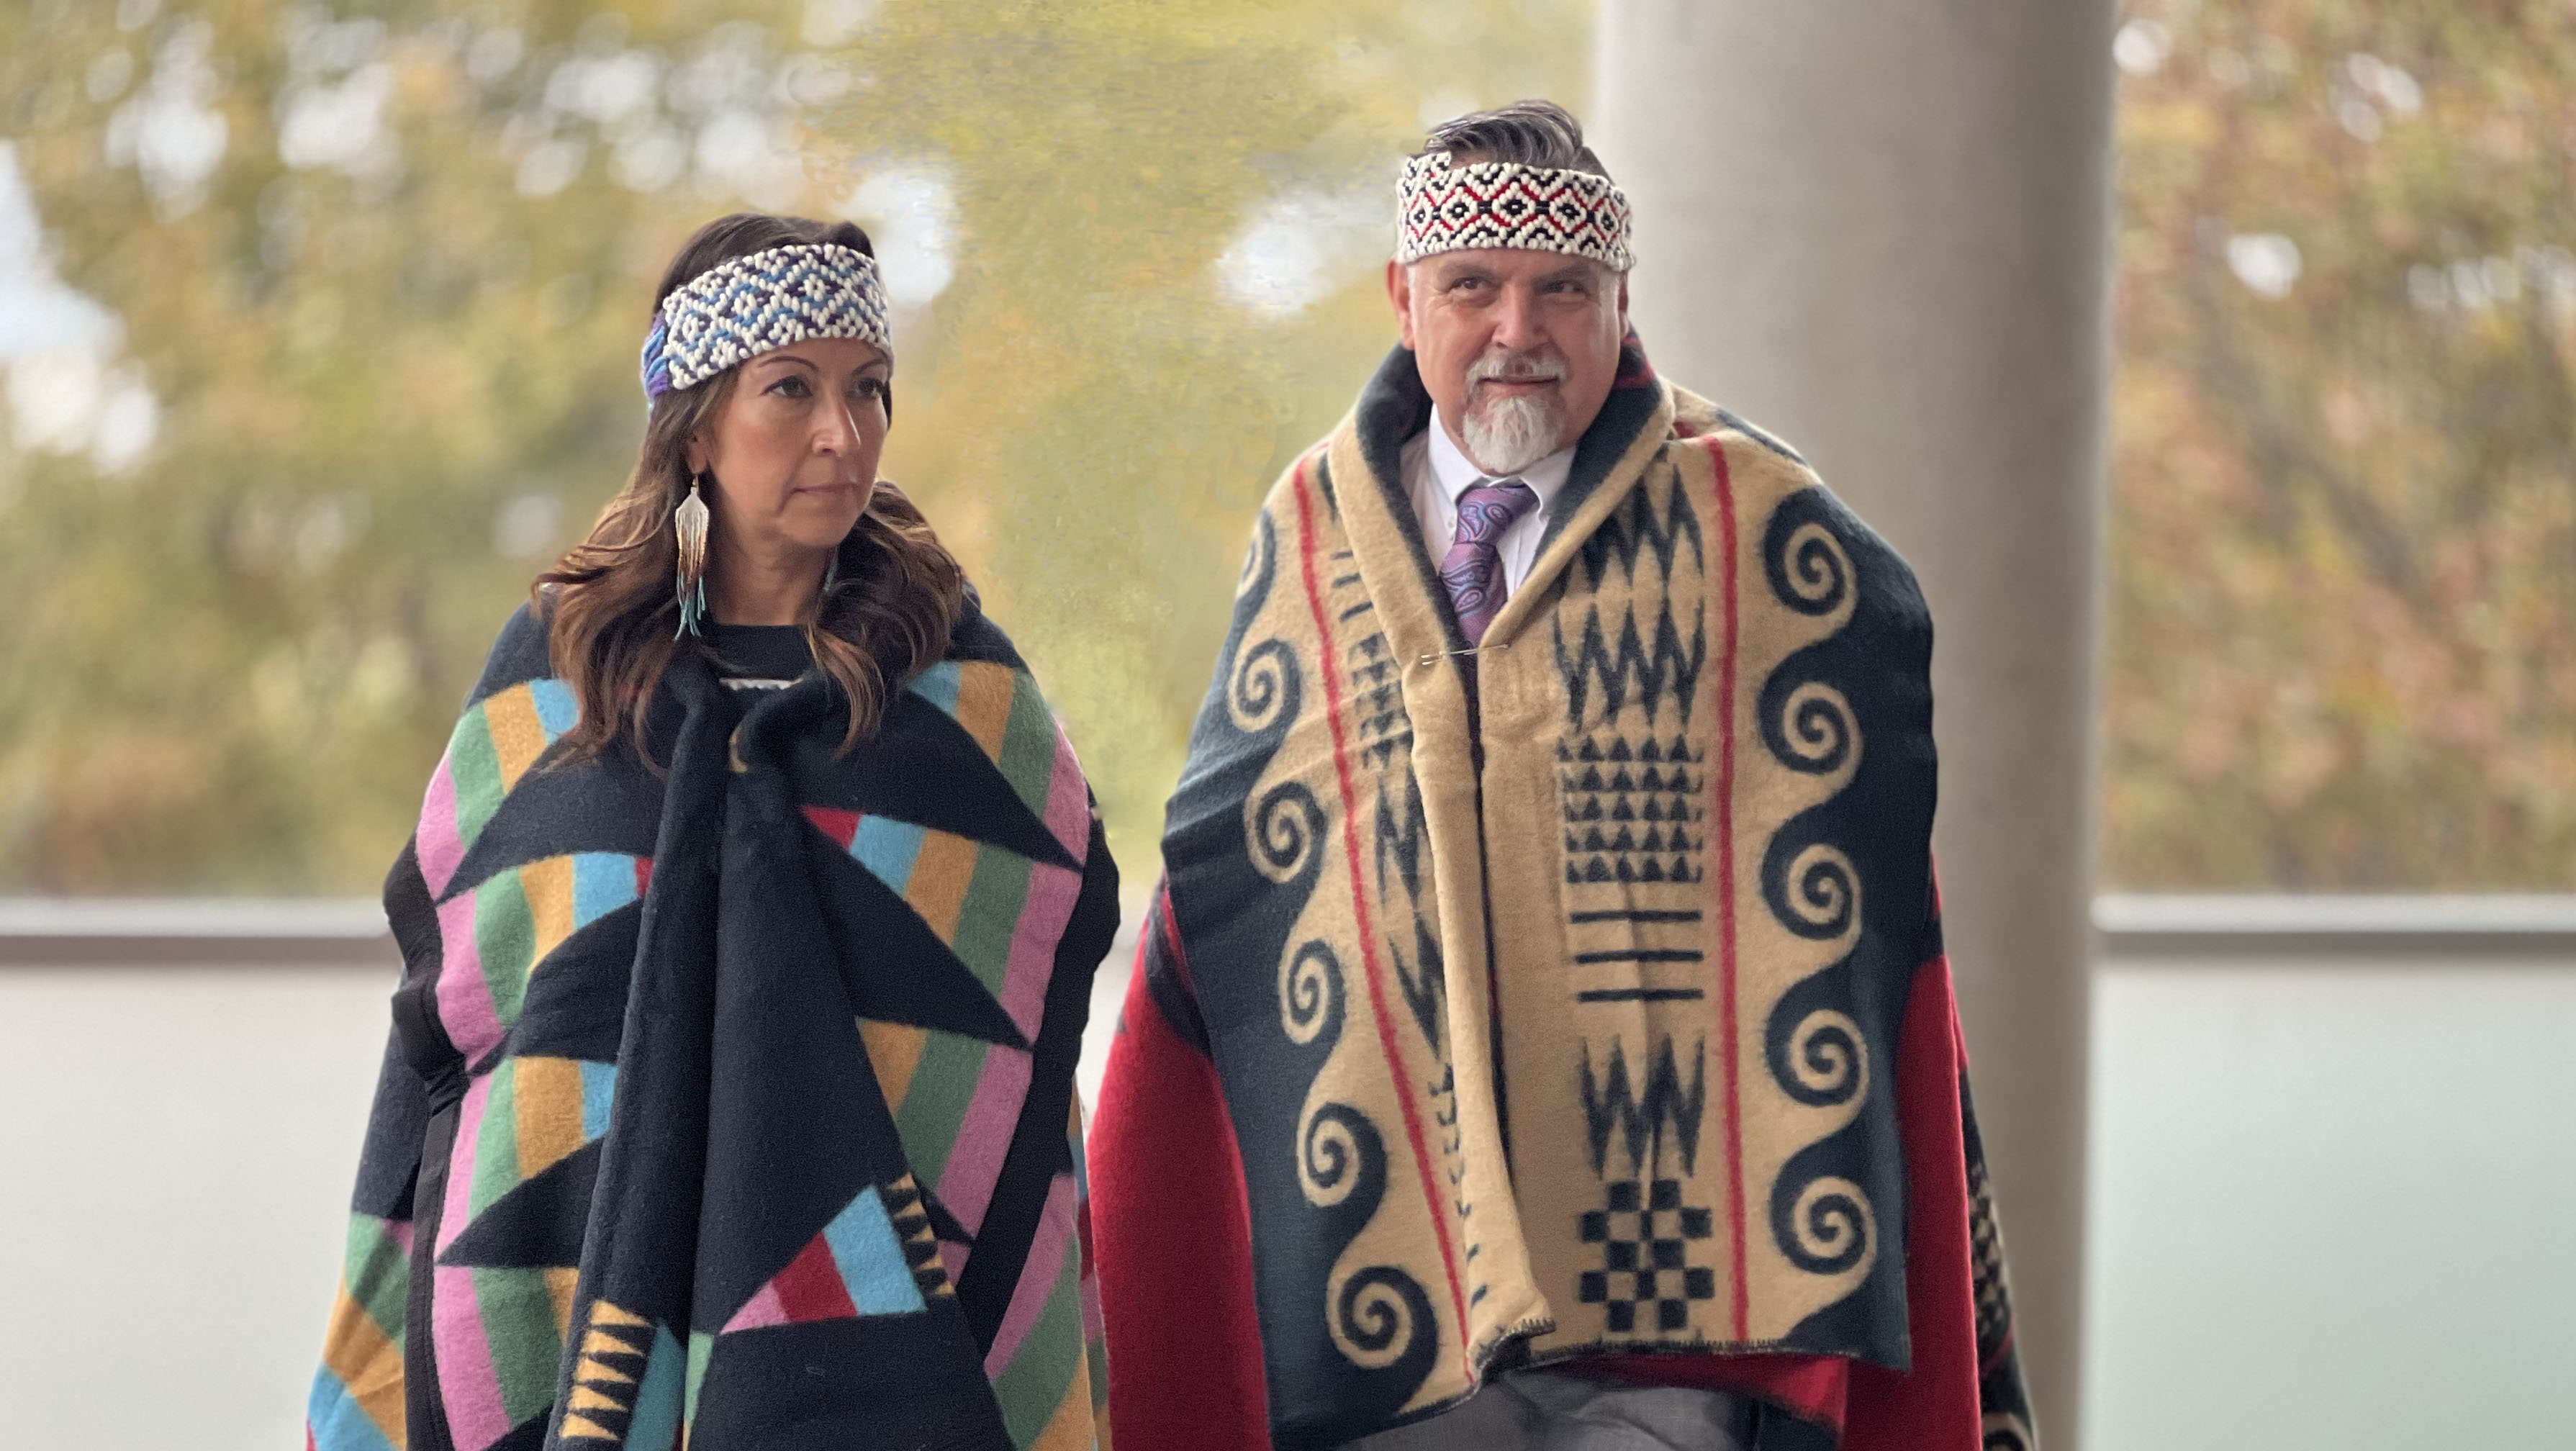 Indigenous leaders blanket ceremony